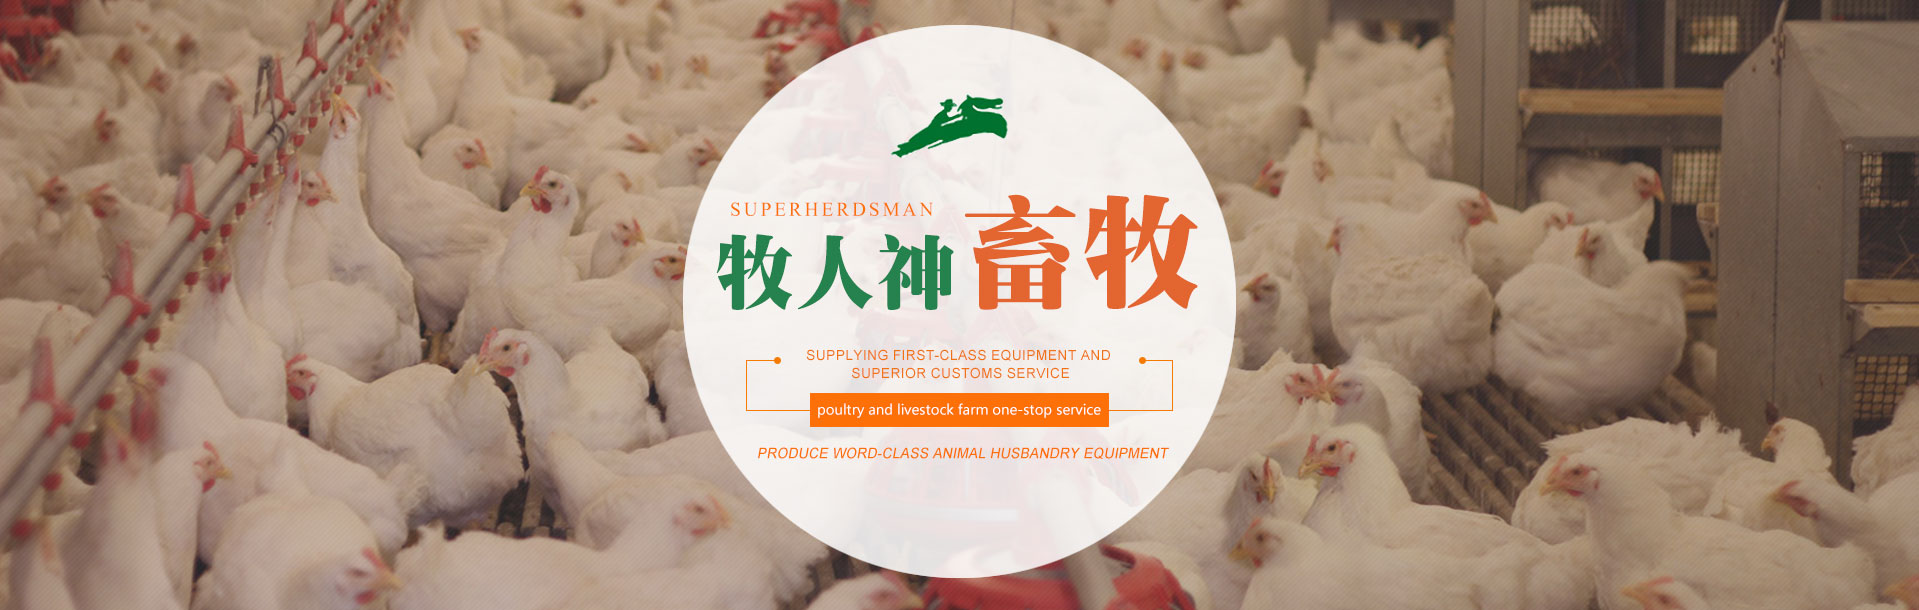 economical poultry equipment